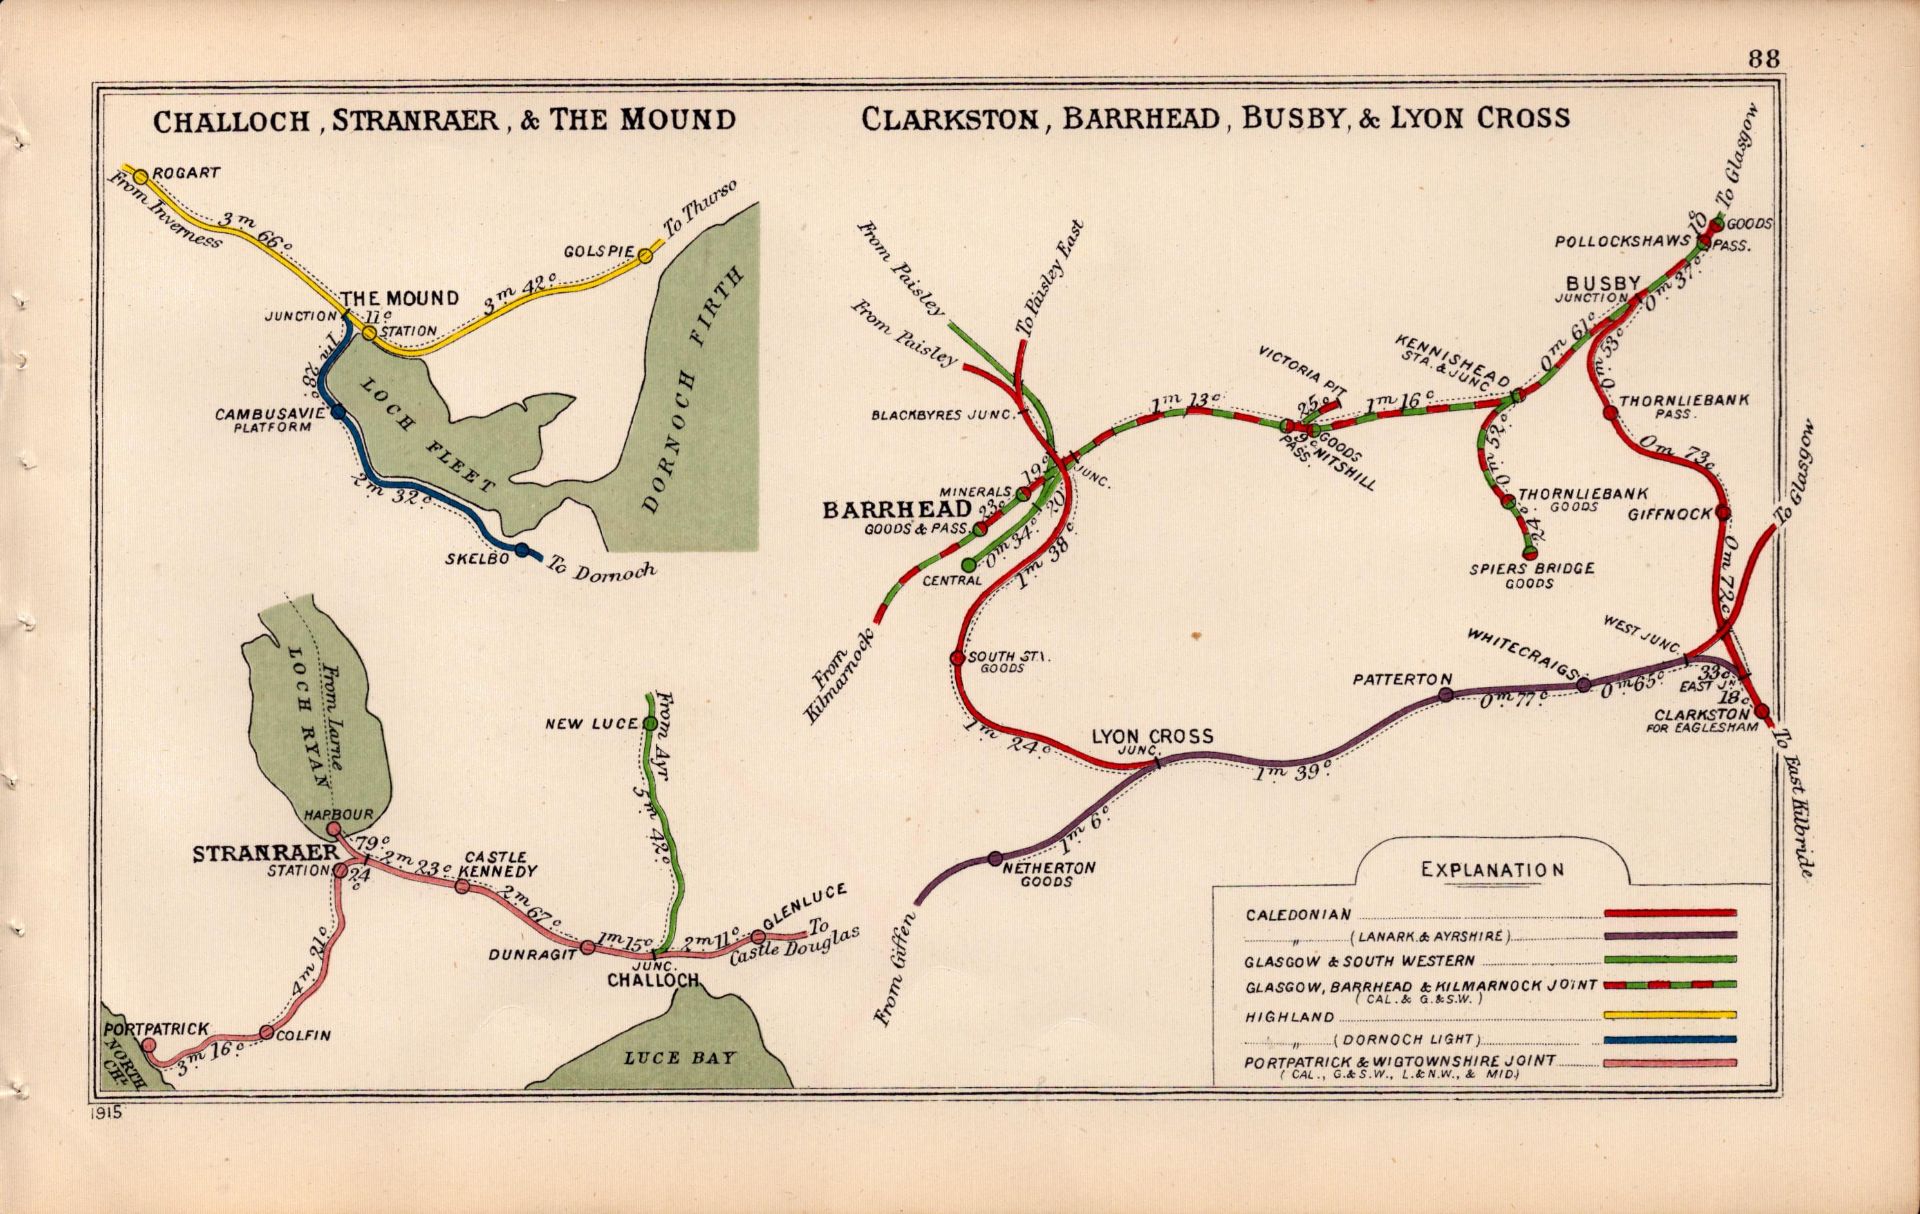 Challoch, Stranraer, Scotland Antique Railway Junction Map-88.